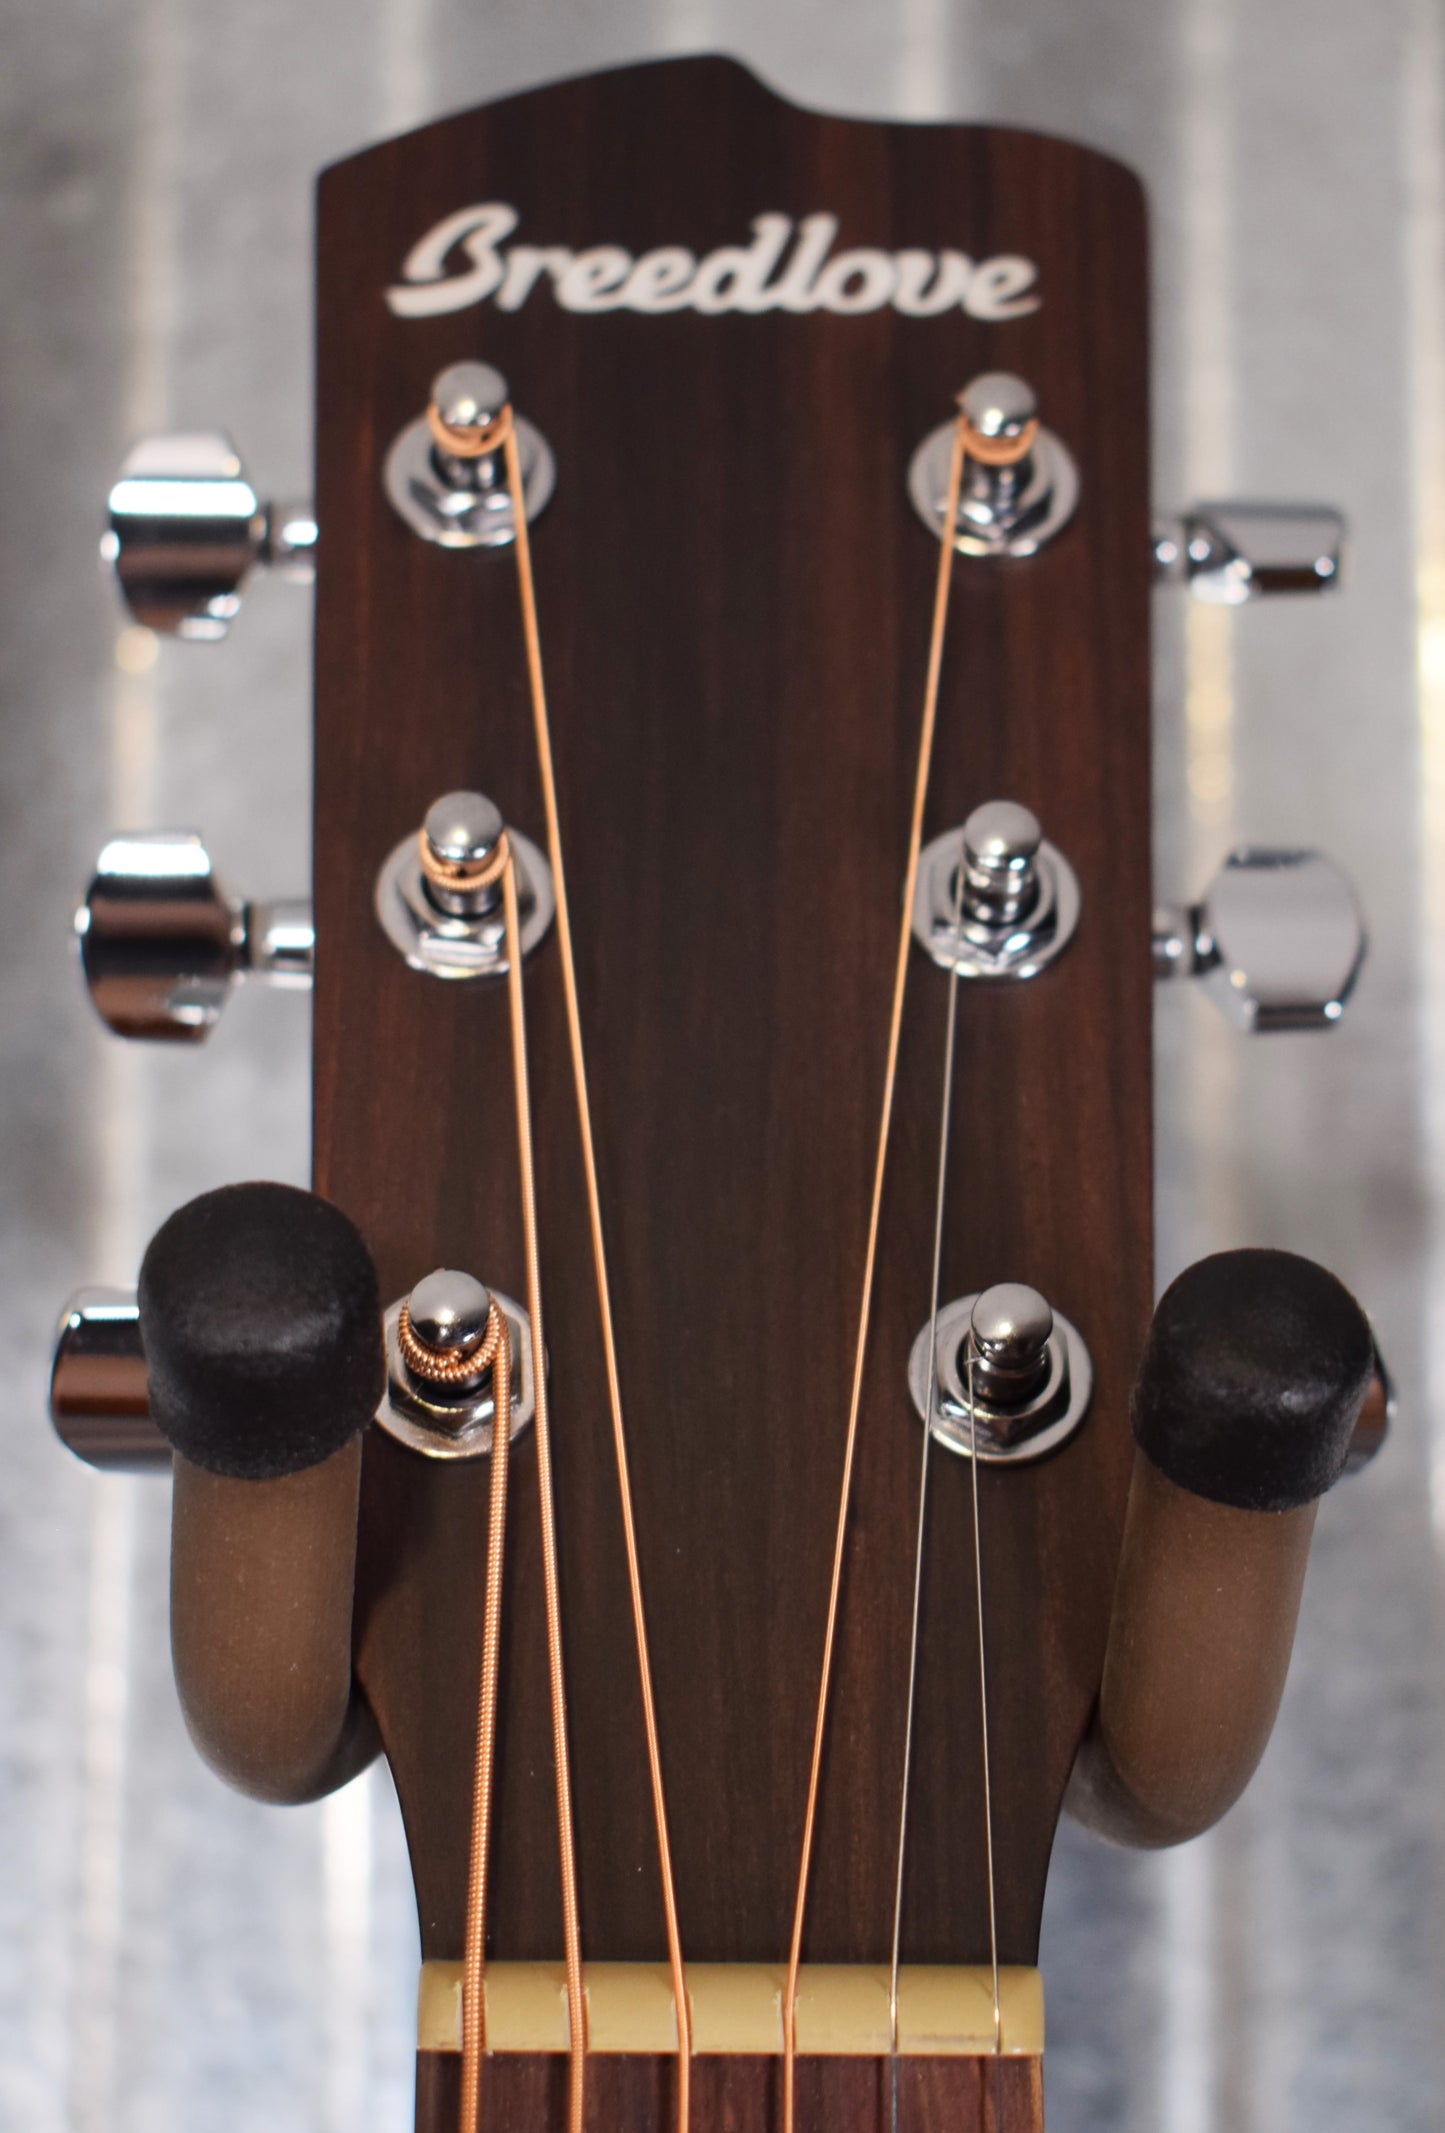 Breedlove Discovery Concertina Sitka Mahogany Acoustic Guitar Blem #6291